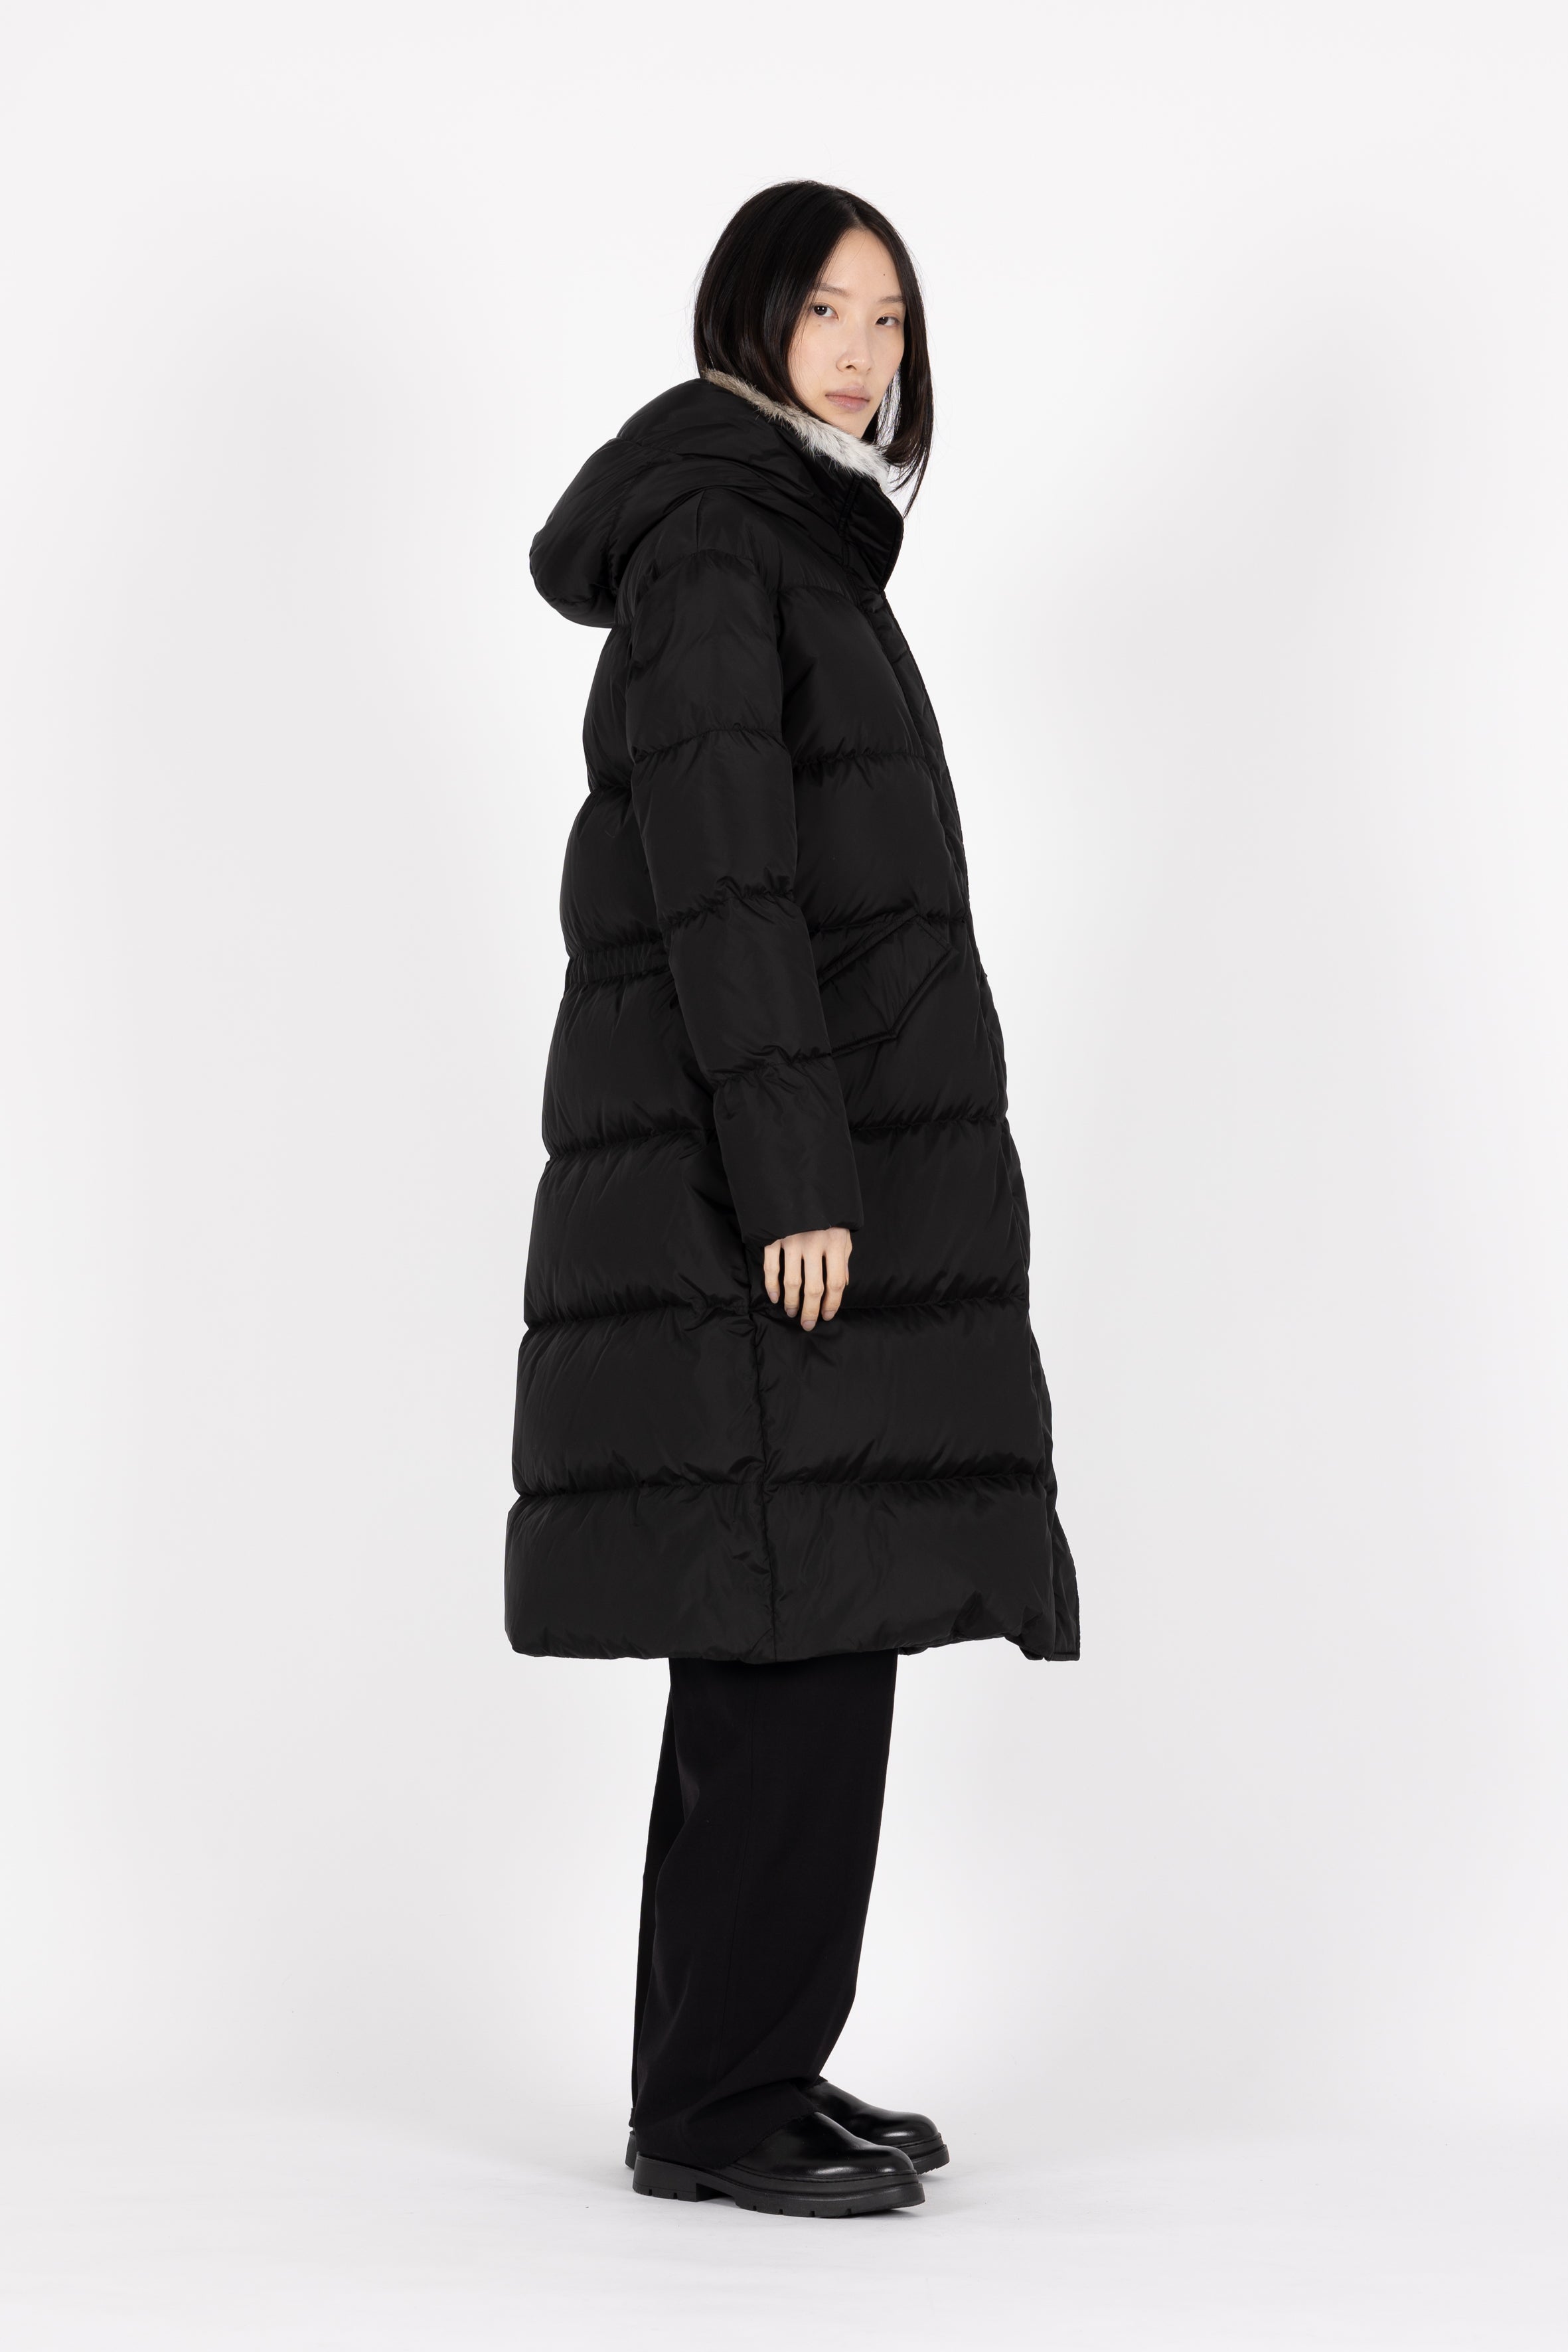 Long down coat in a dark color